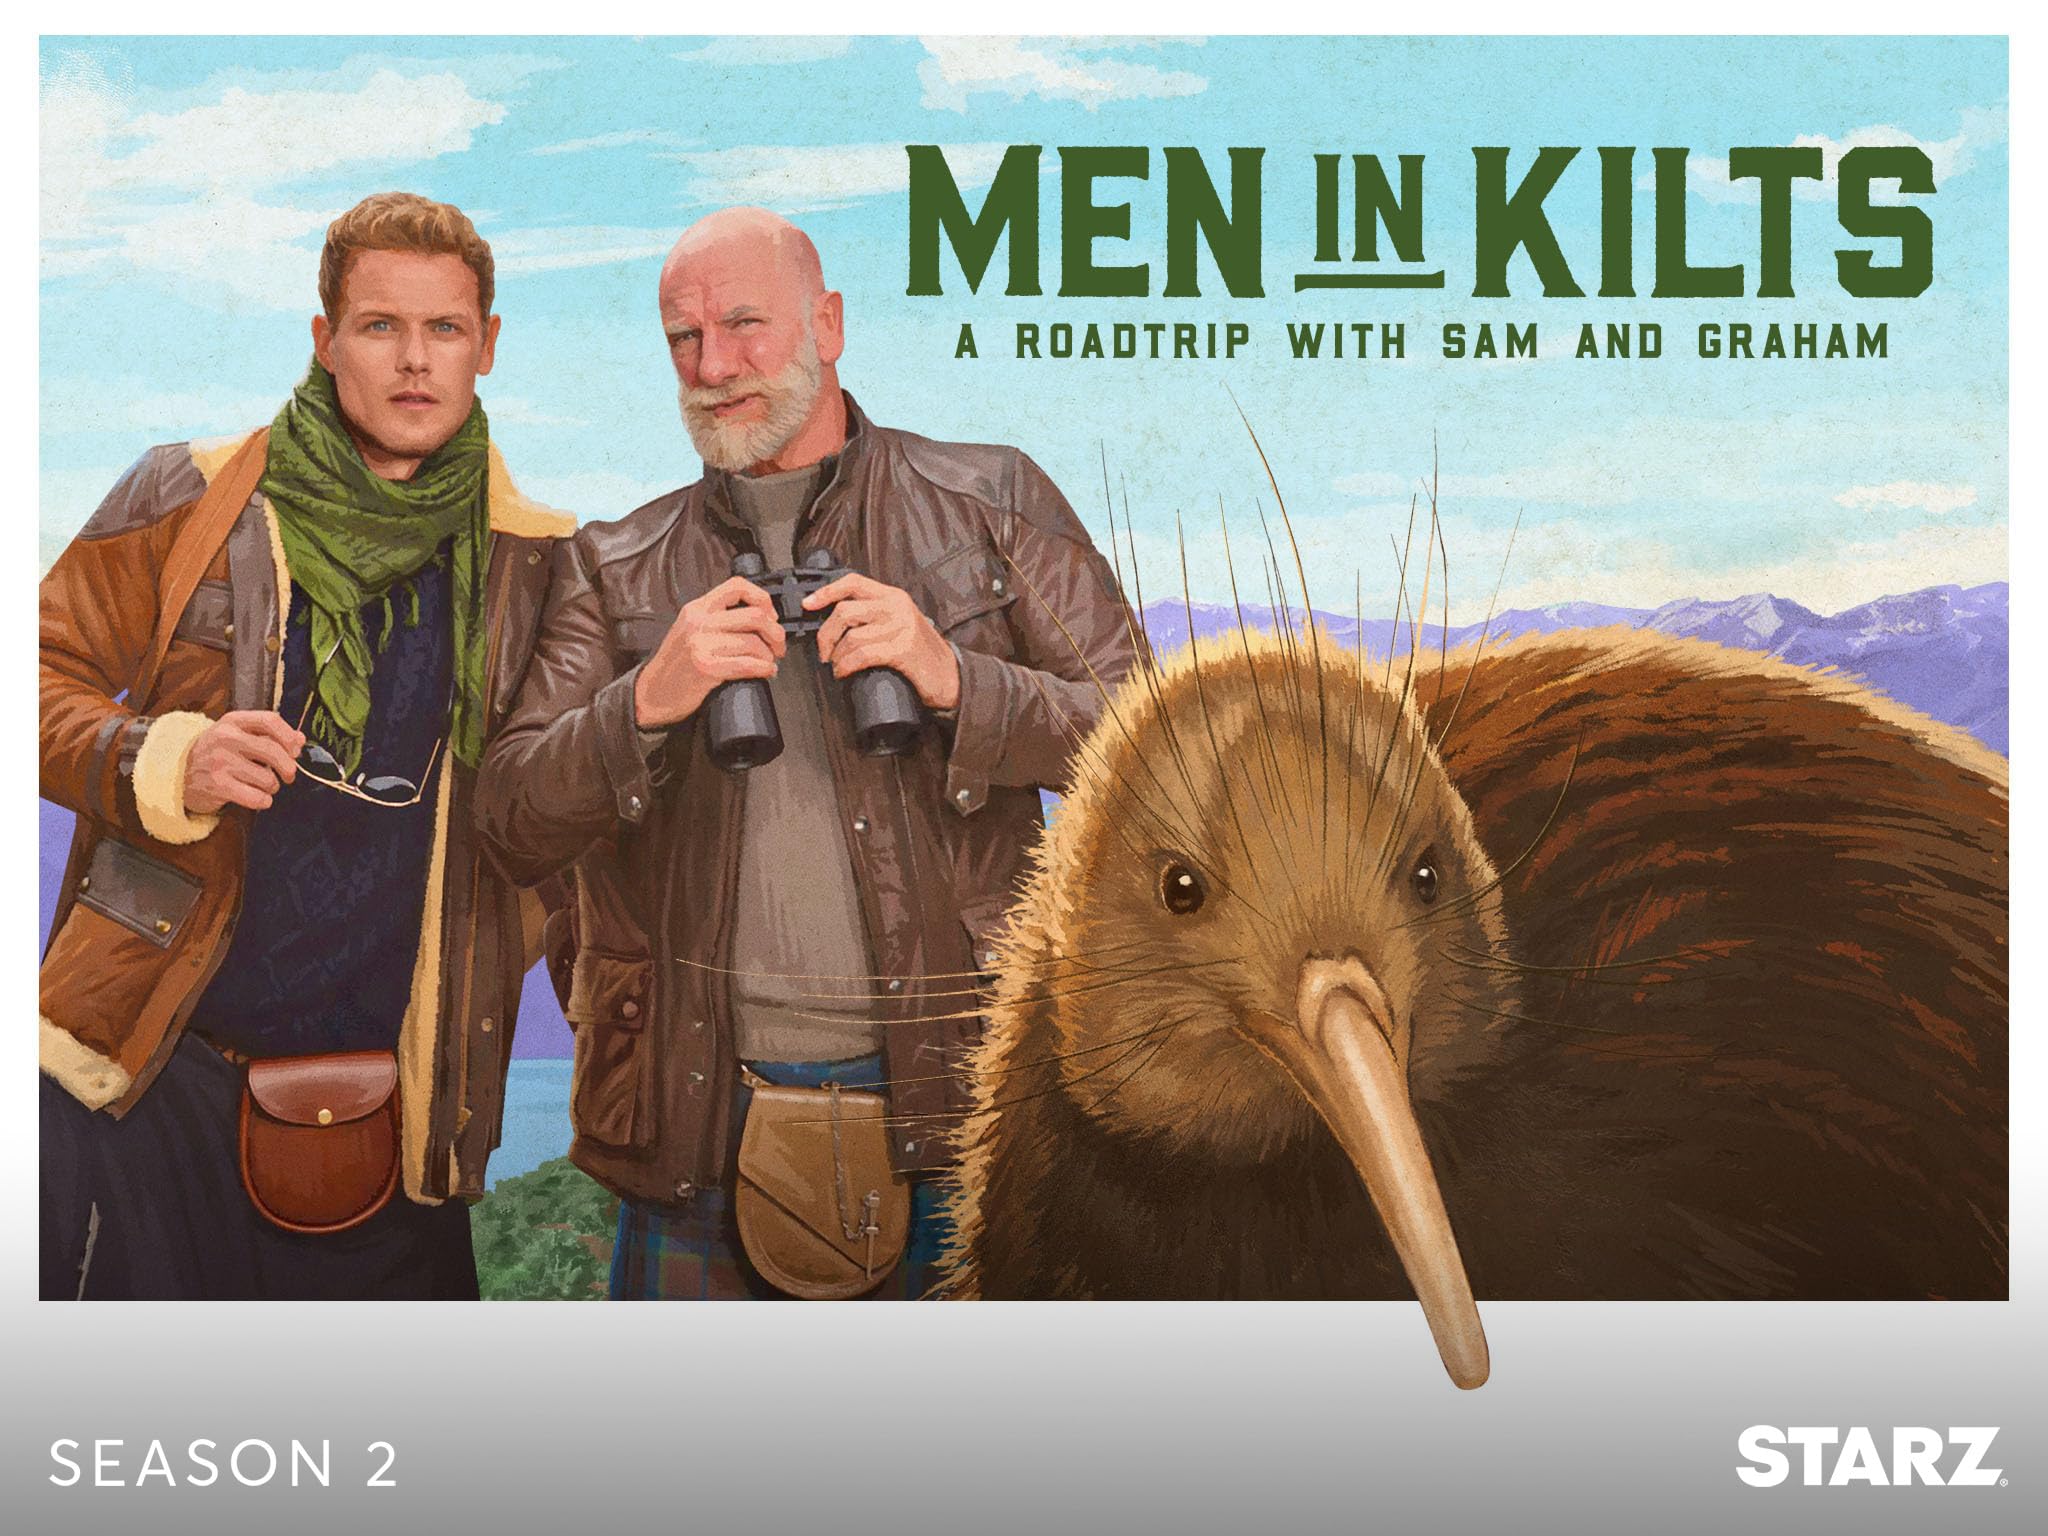 Mua Men In Kilts A Roadtrip With Sam and Graham trên Amazon Mỹ chính